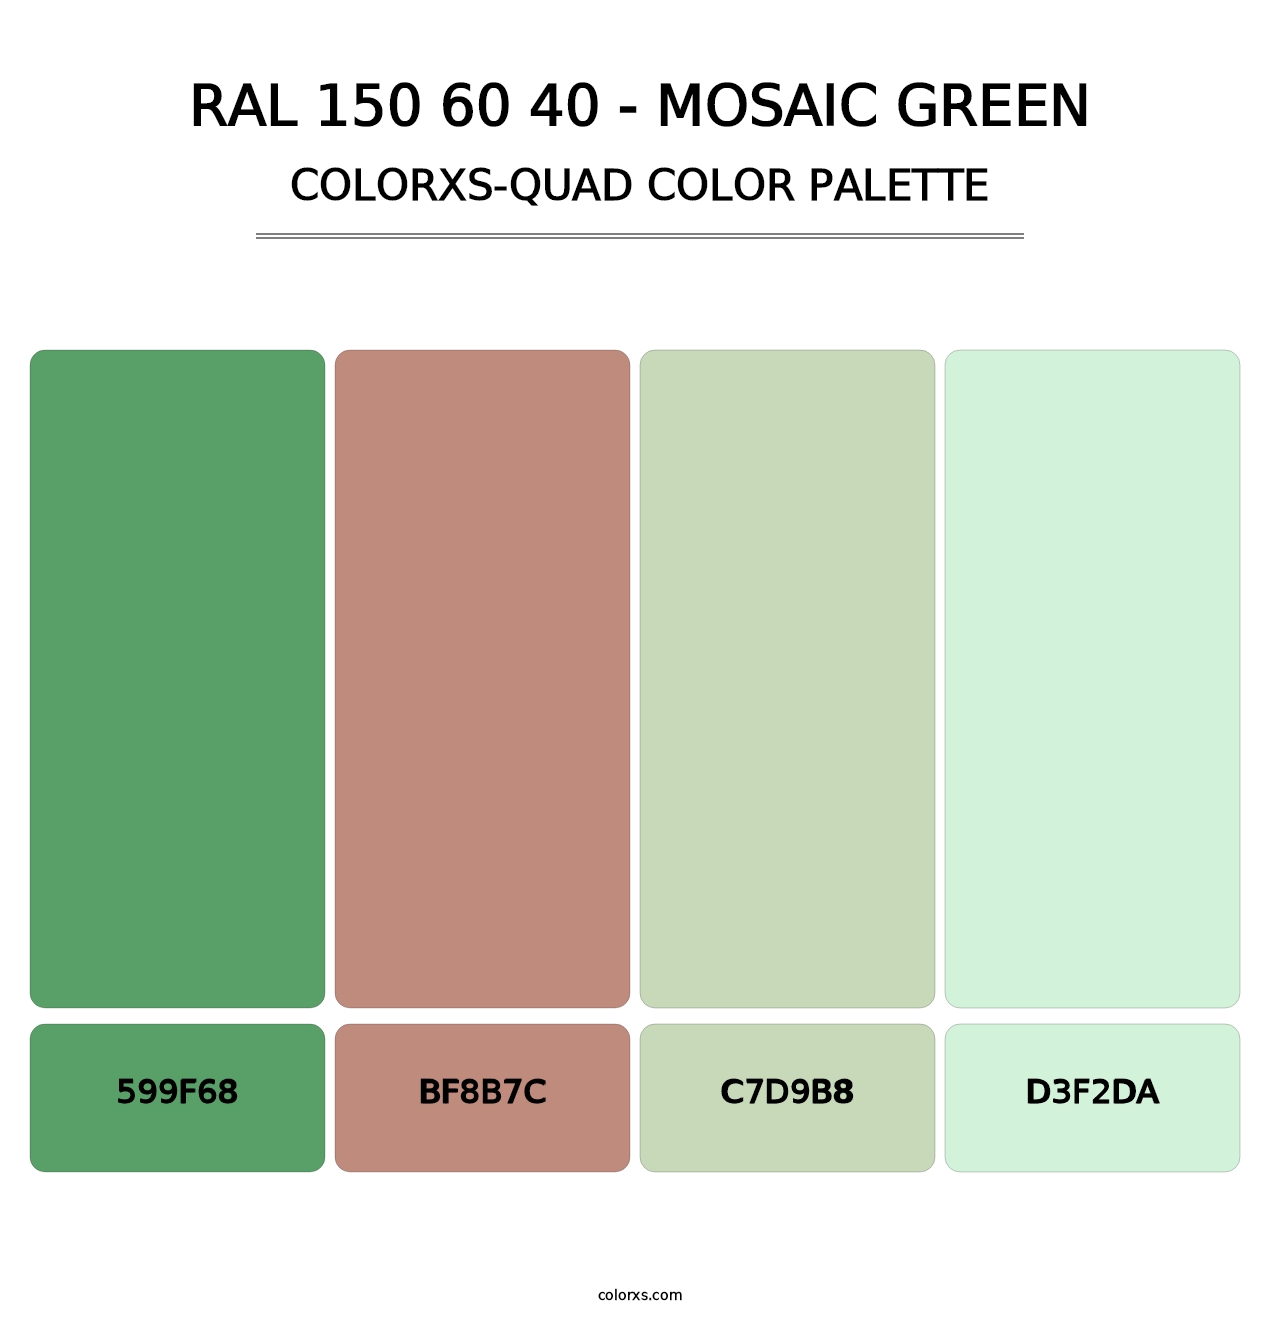 RAL 150 60 40 - Mosaic Green - Colorxs Quad Palette